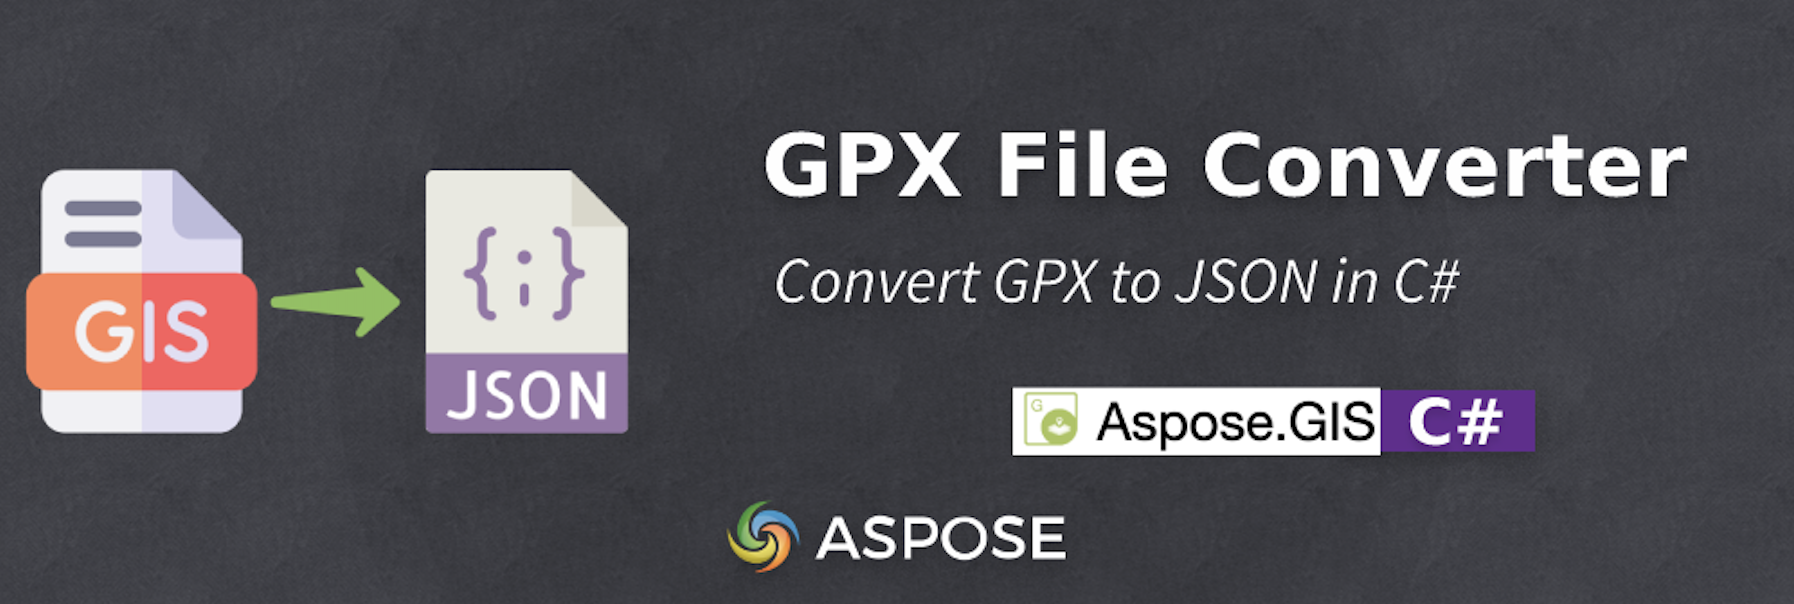 Преобразование GPX в JSON на C# — конвертер файлов GPX